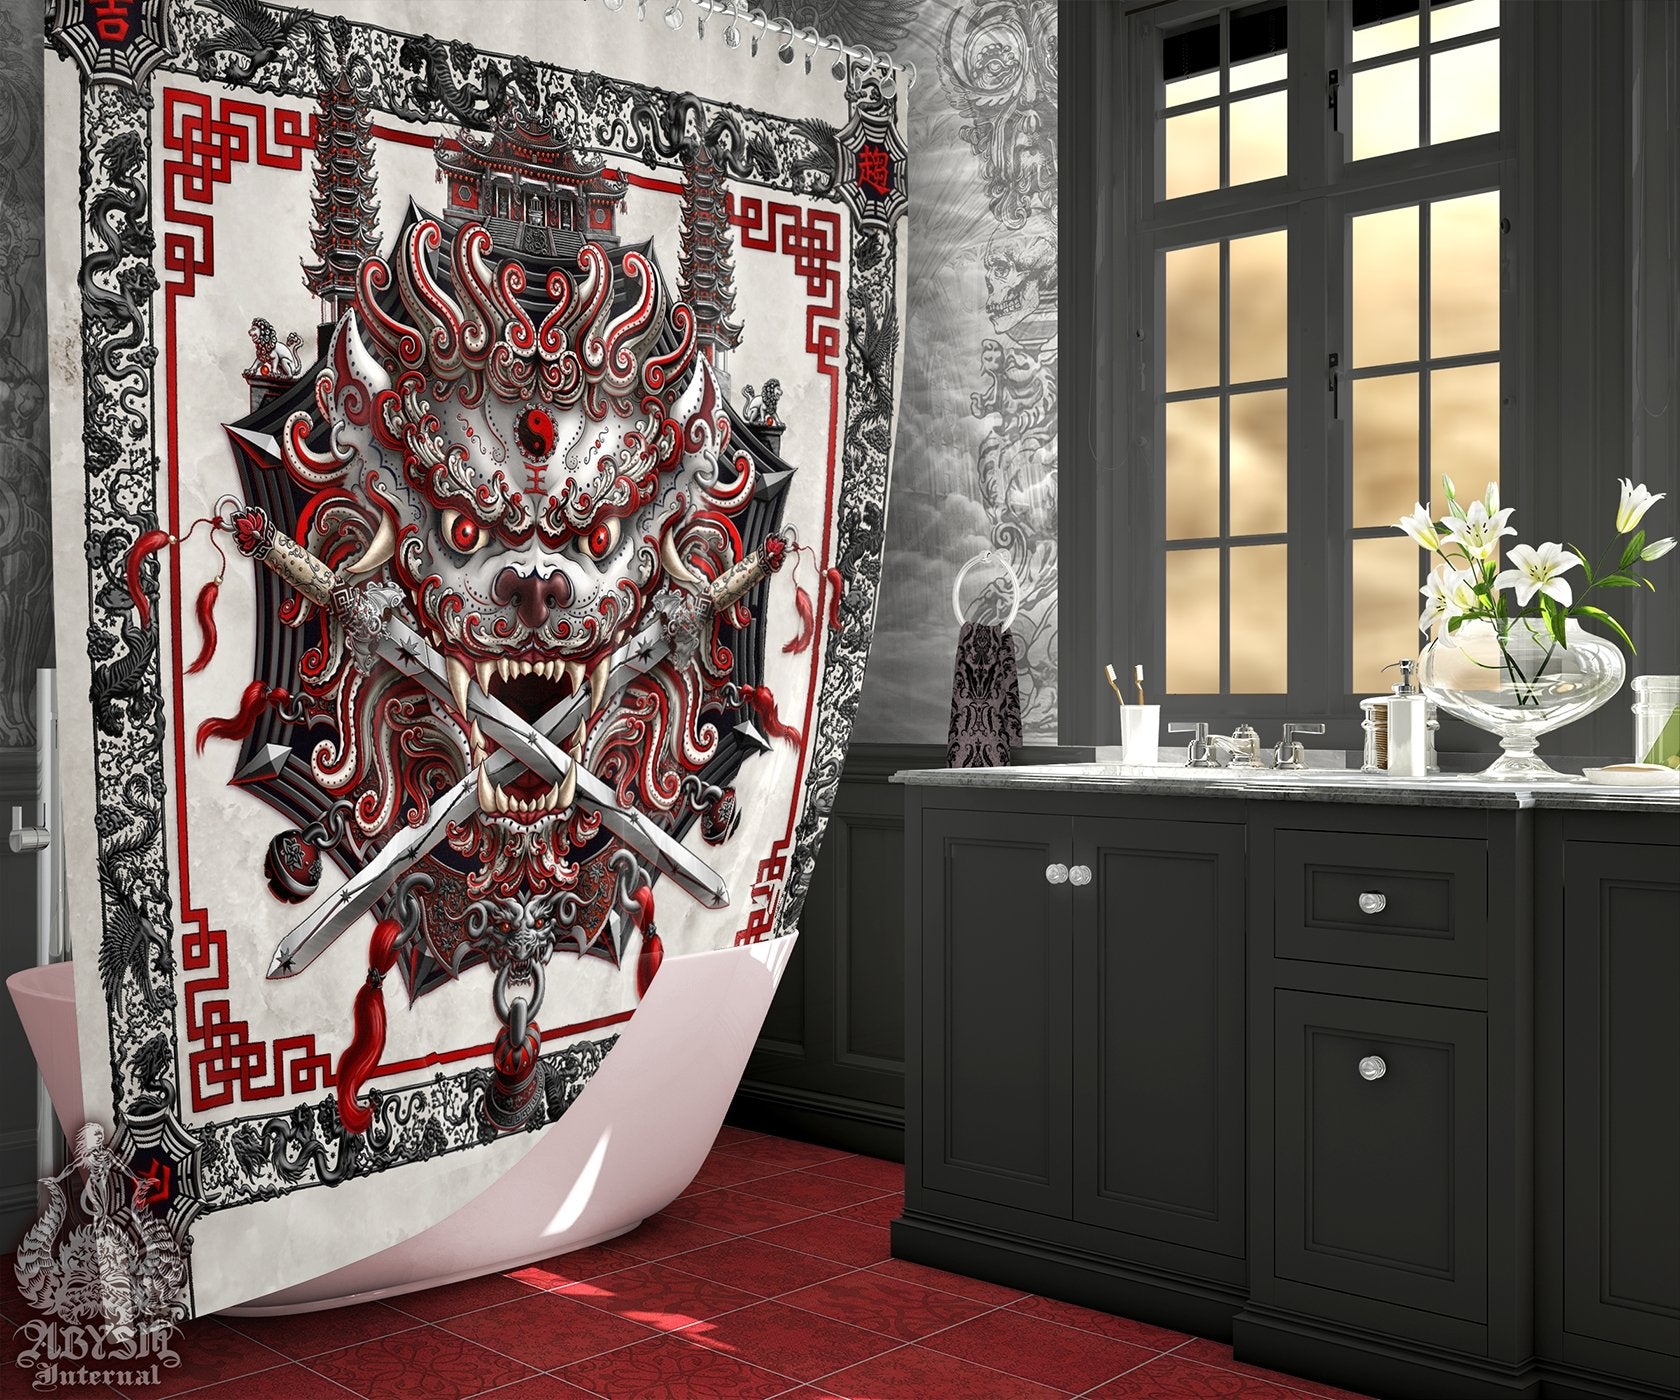 Lion Shower Curtain, Taiwan Sword Lion, Chinese Bathroom, Alternative Fantasy Decor, Asian Mythology - Bloody White Goth - Abysm Internal